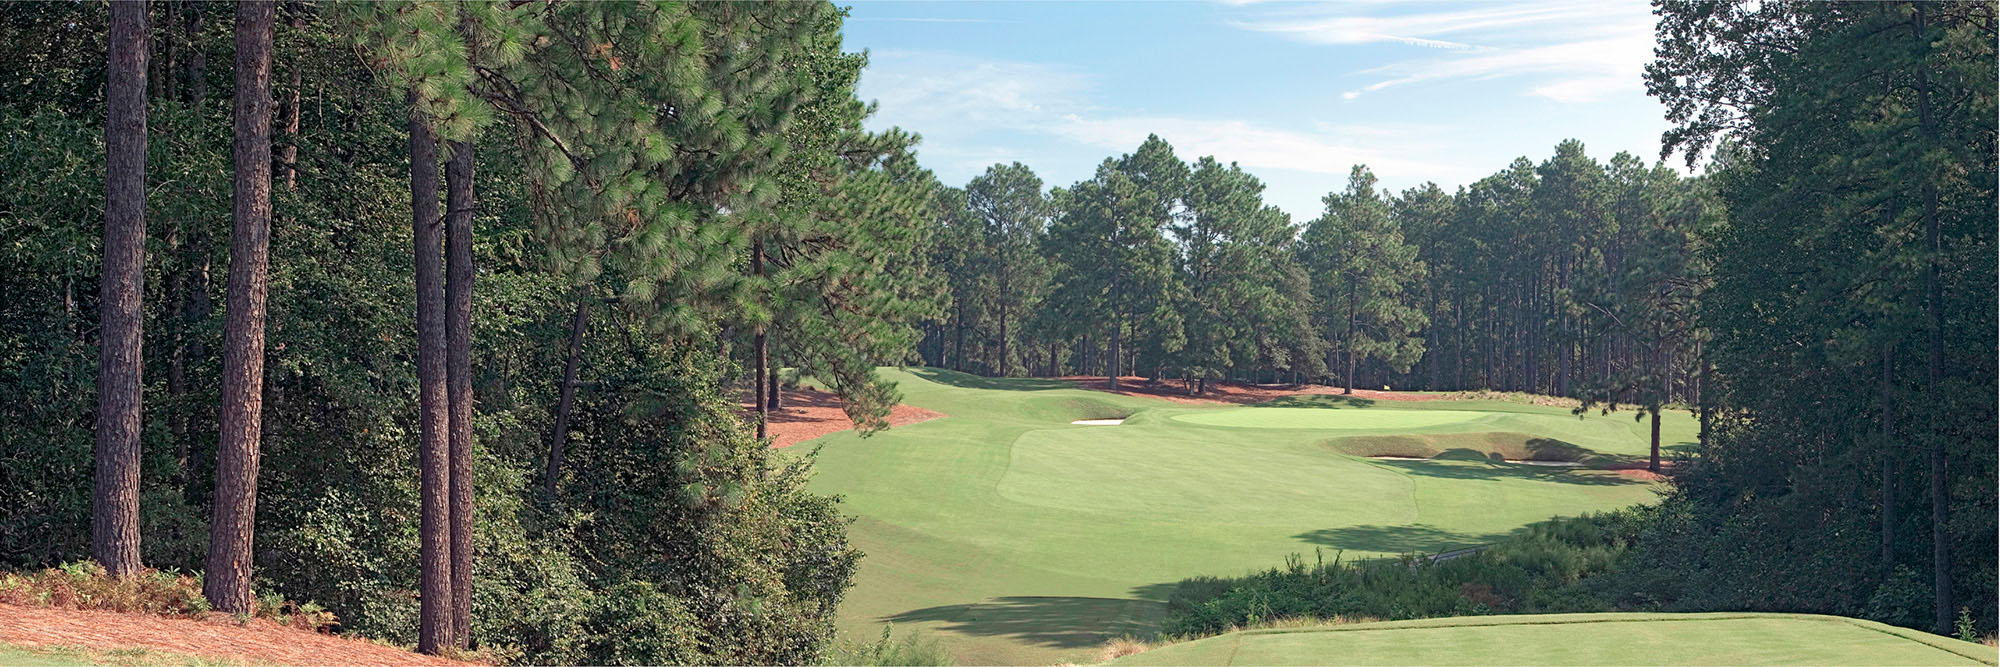 Golf Course Image - Pine Needles No. 5